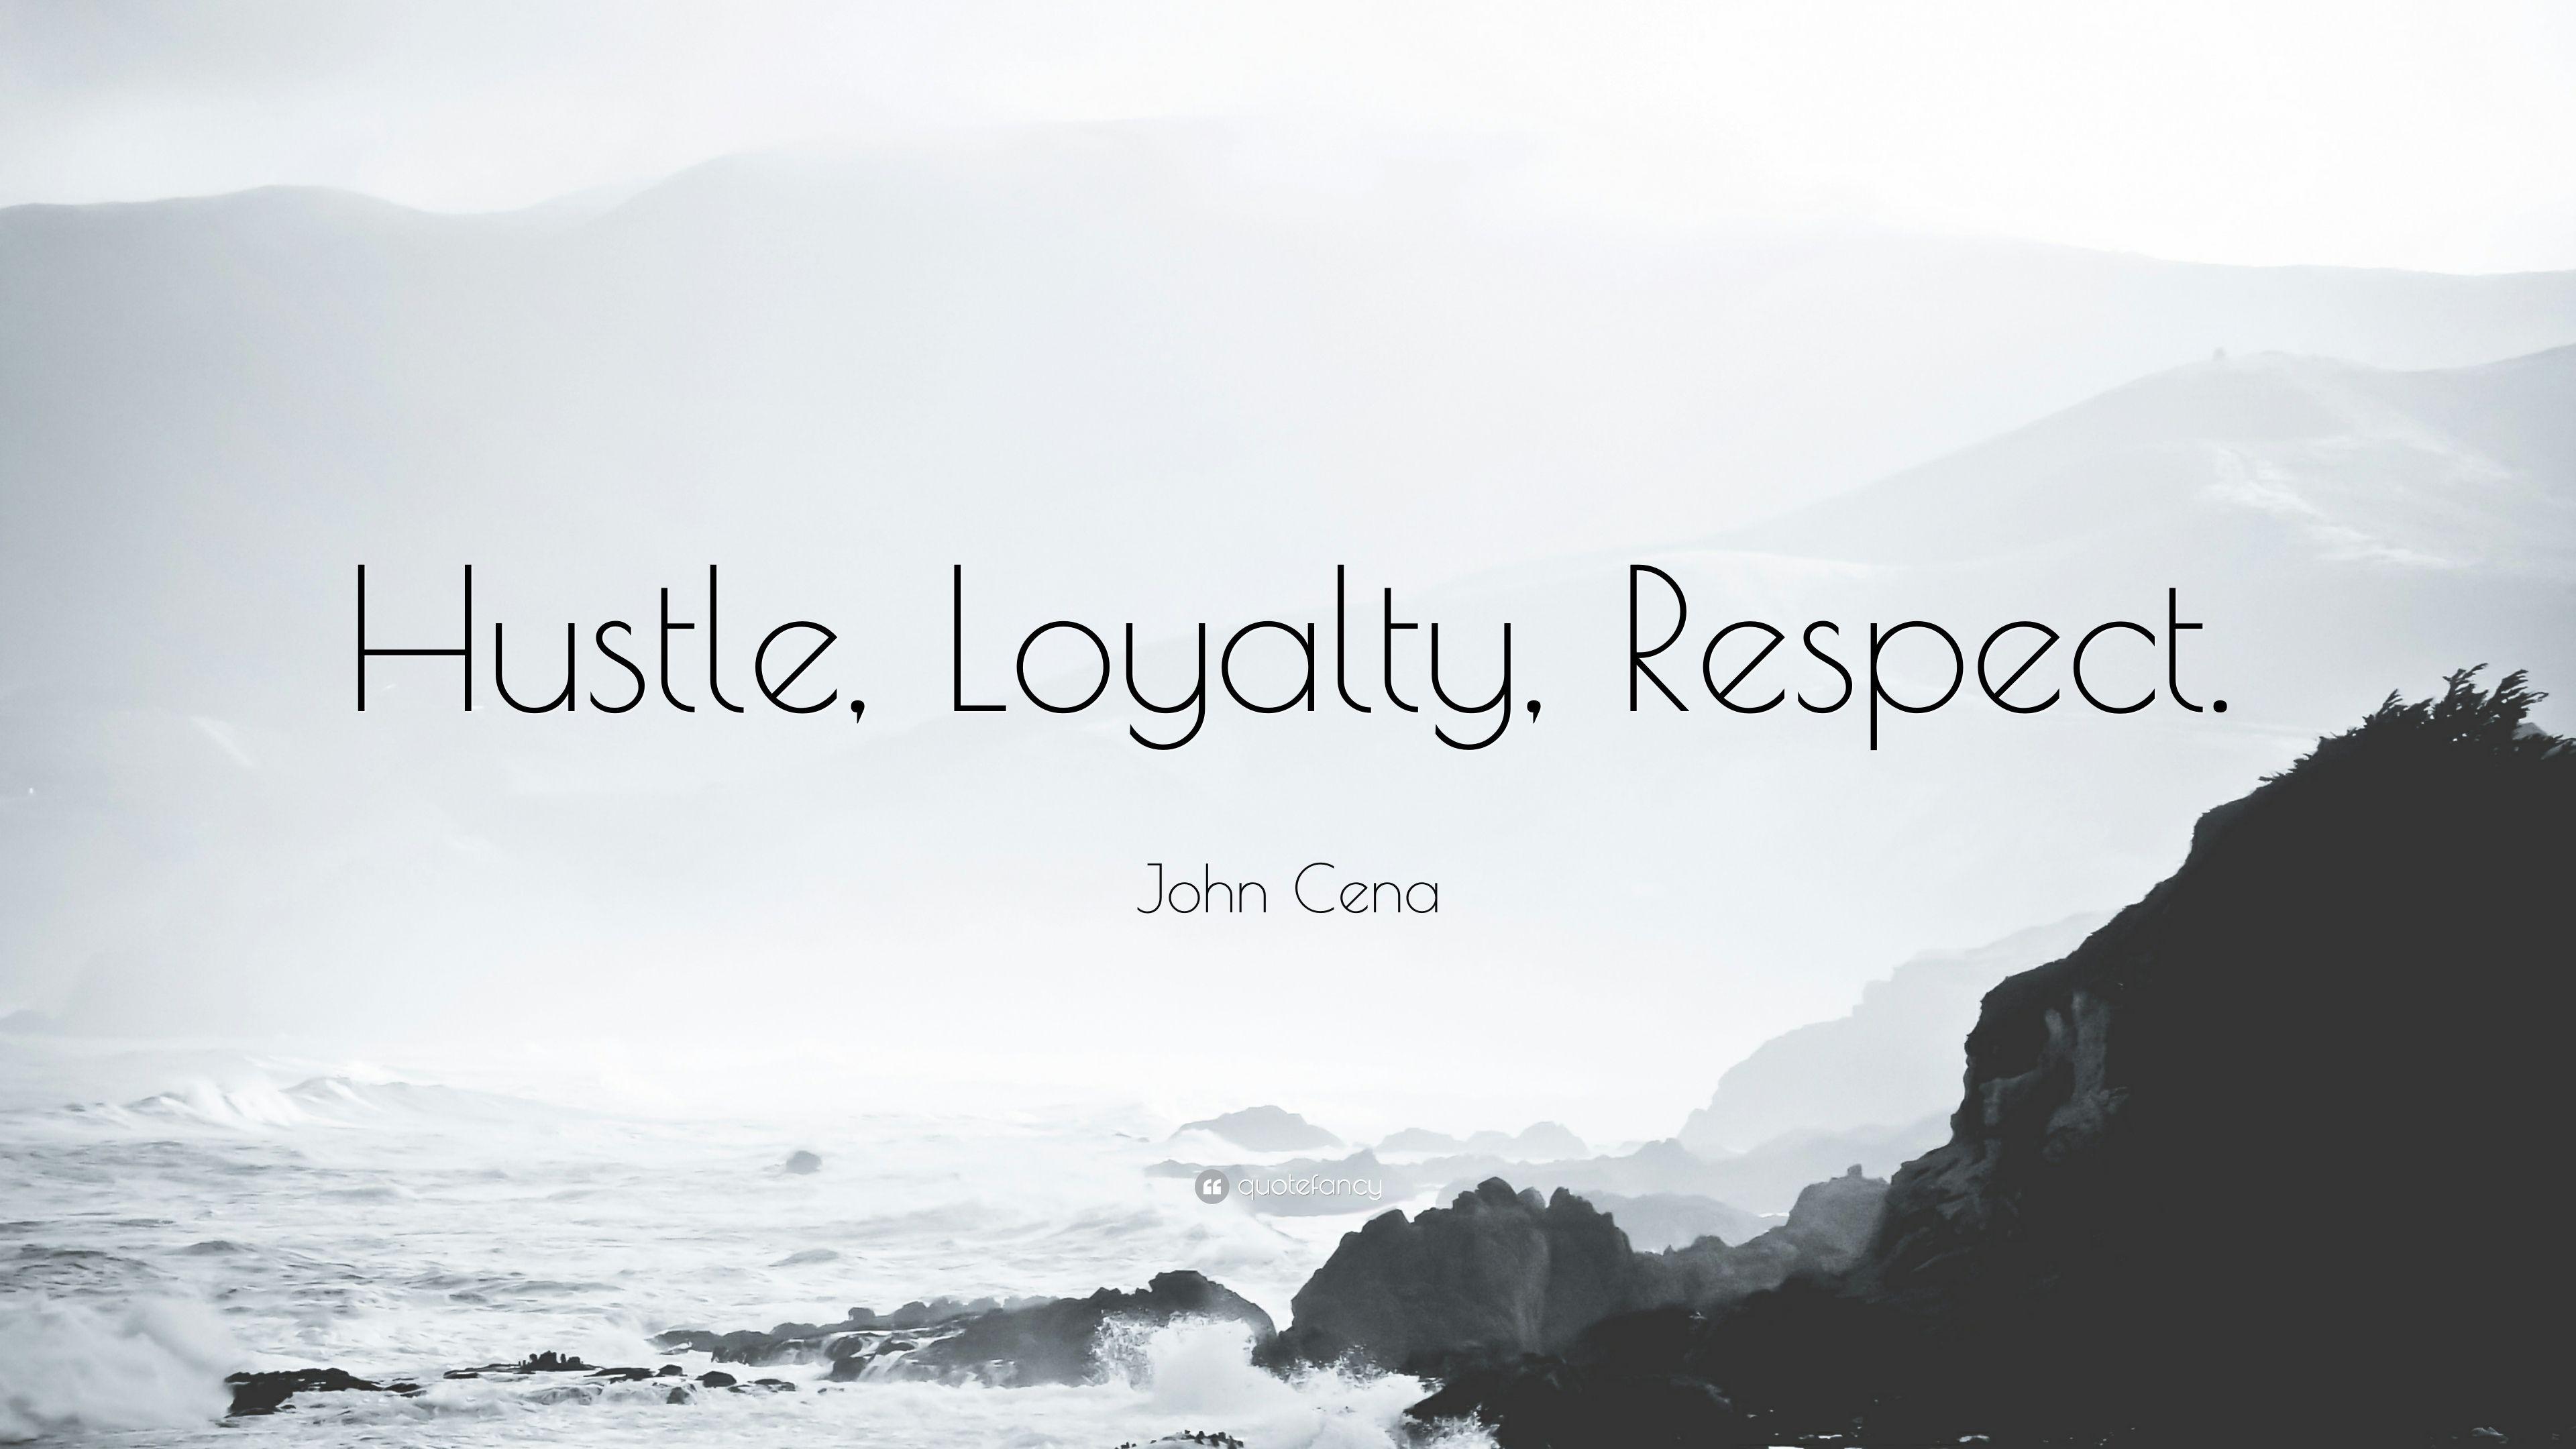 John Cena Quote: “Hustle, Loyalty, Respect.” 12 wallpaper